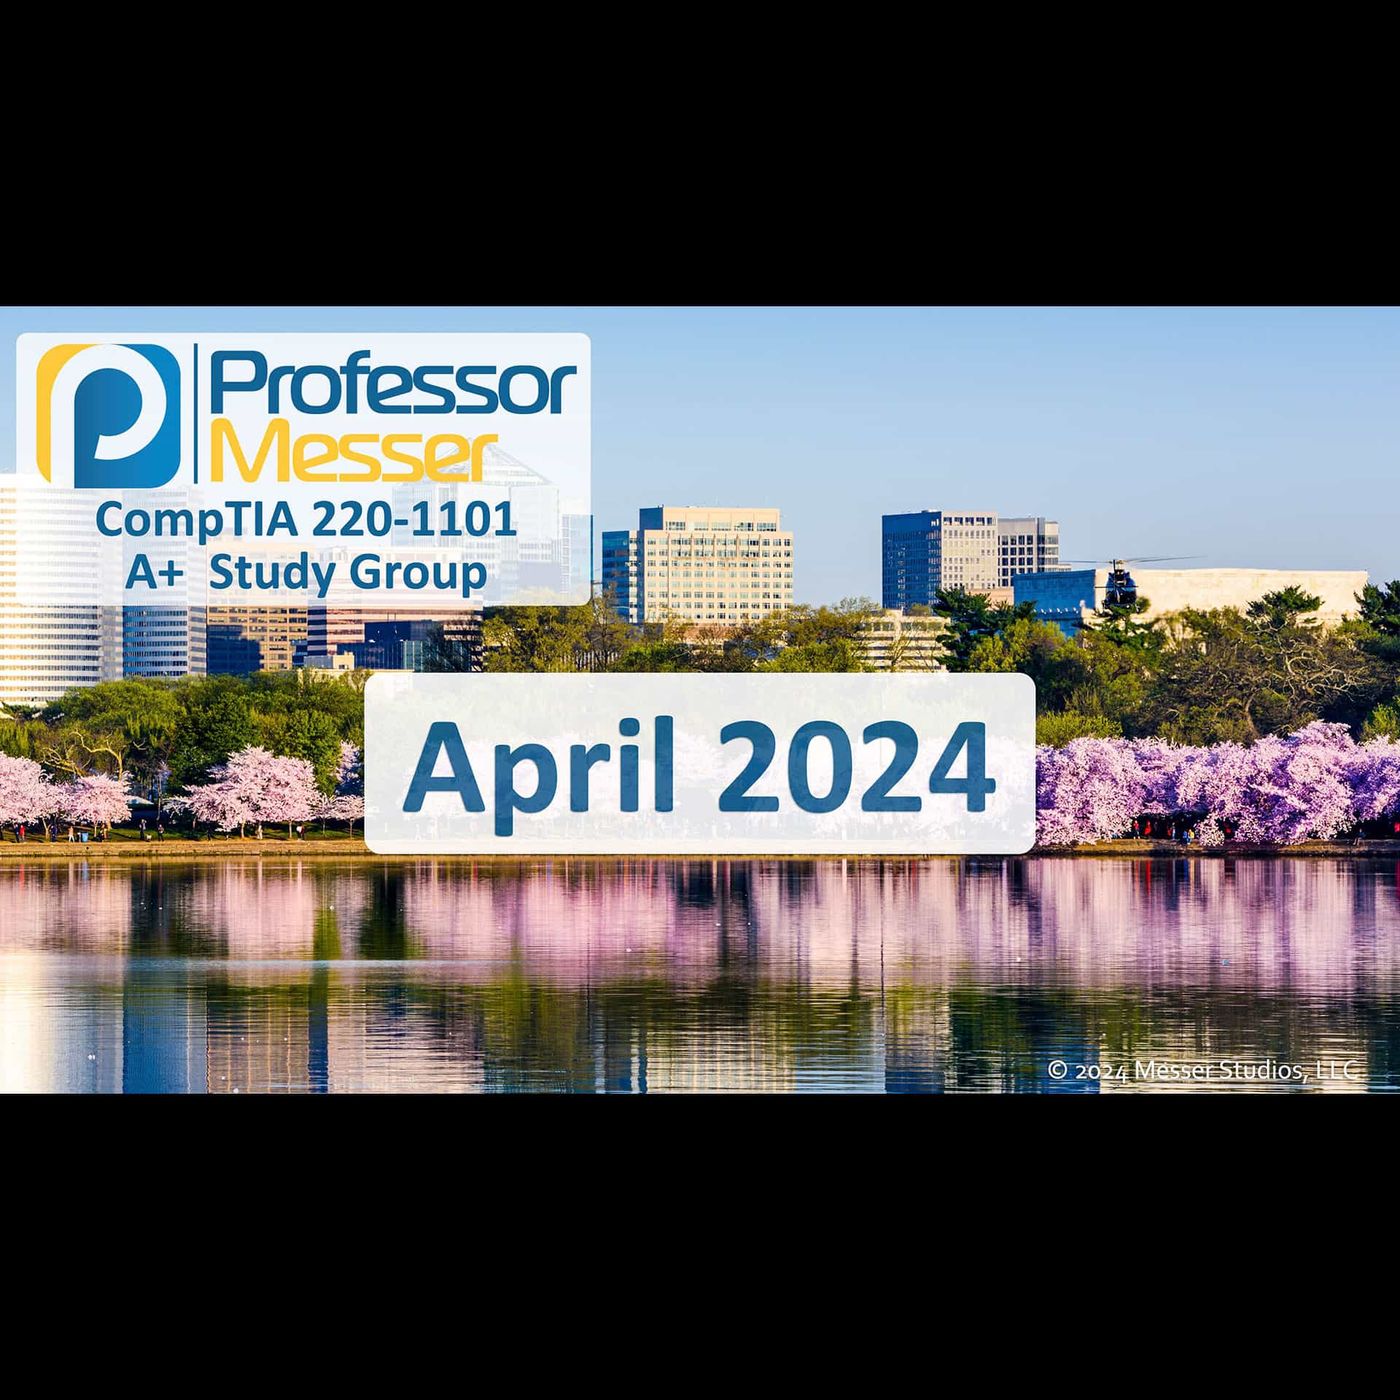 Professor Messer's CompTIA 220-1101 A+ Study Group - April 2024